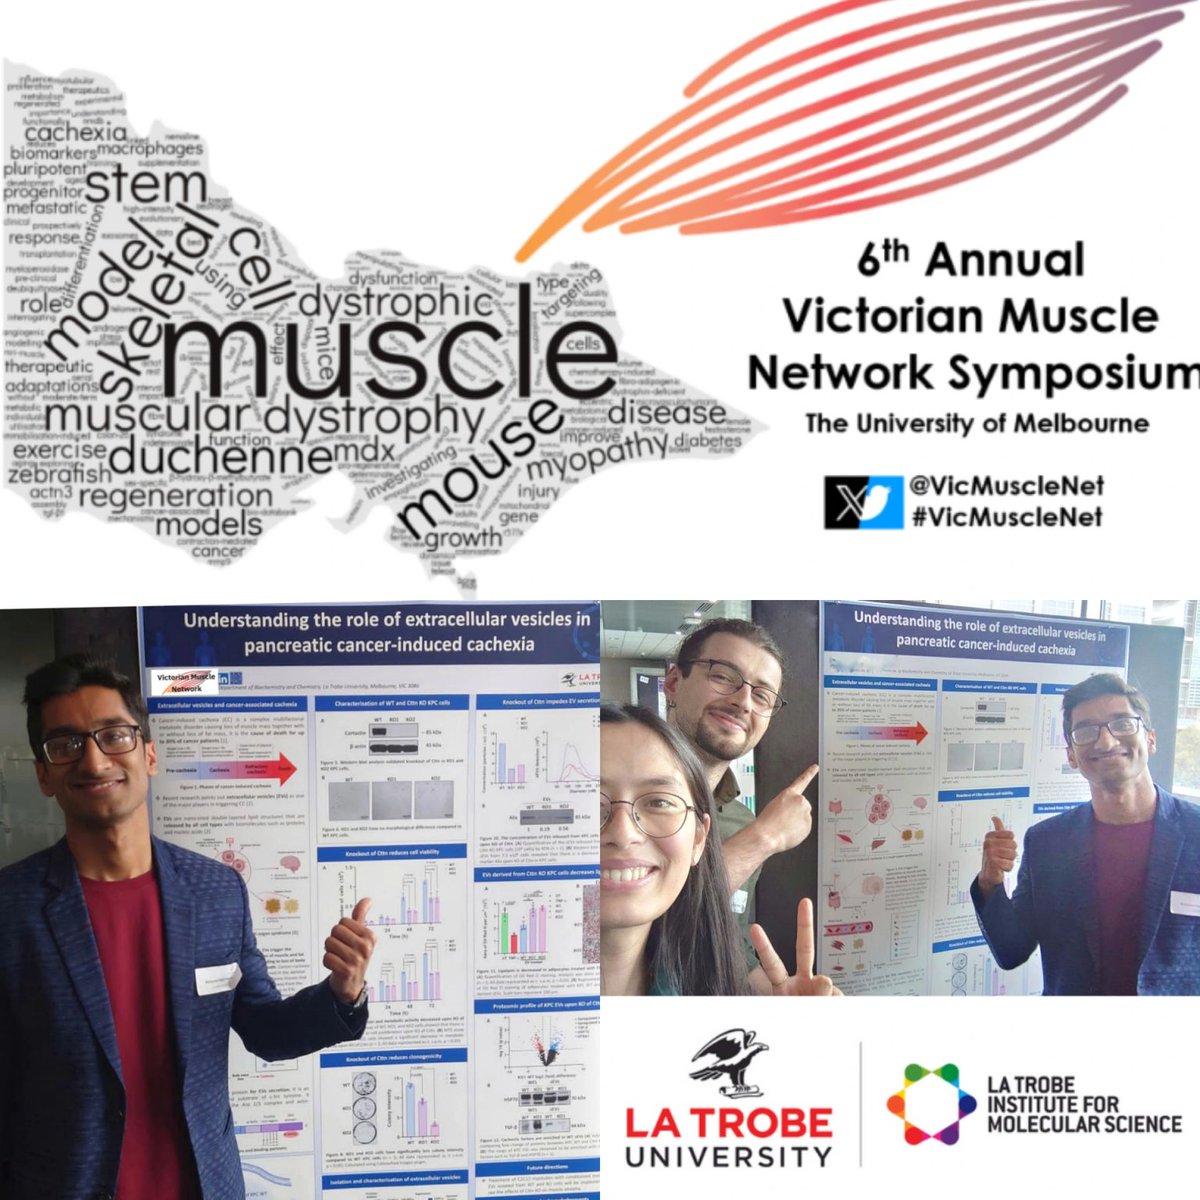 𝟔𝐭𝐡 𝐚𝐧𝐧𝐮𝐚𝐥 𝐯𝐢𝐜𝐭𝐨𝐫𝐢𝐚𝐧 𝐦𝐮𝐬𝐜𝐥𝐞 𝐧𝐞𝐭𝐰𝐨𝐫𝐤 (𝐯𝐦𝐧) 𝐬𝐲𝐦𝐩𝐨𝐬𝐢𝐮𝐦 💫

#MuscleNetwork  #VictorianMuscleNetwork #VMN #latrobeuniversity #lims #Victoria #symposium #NetworkingInScience